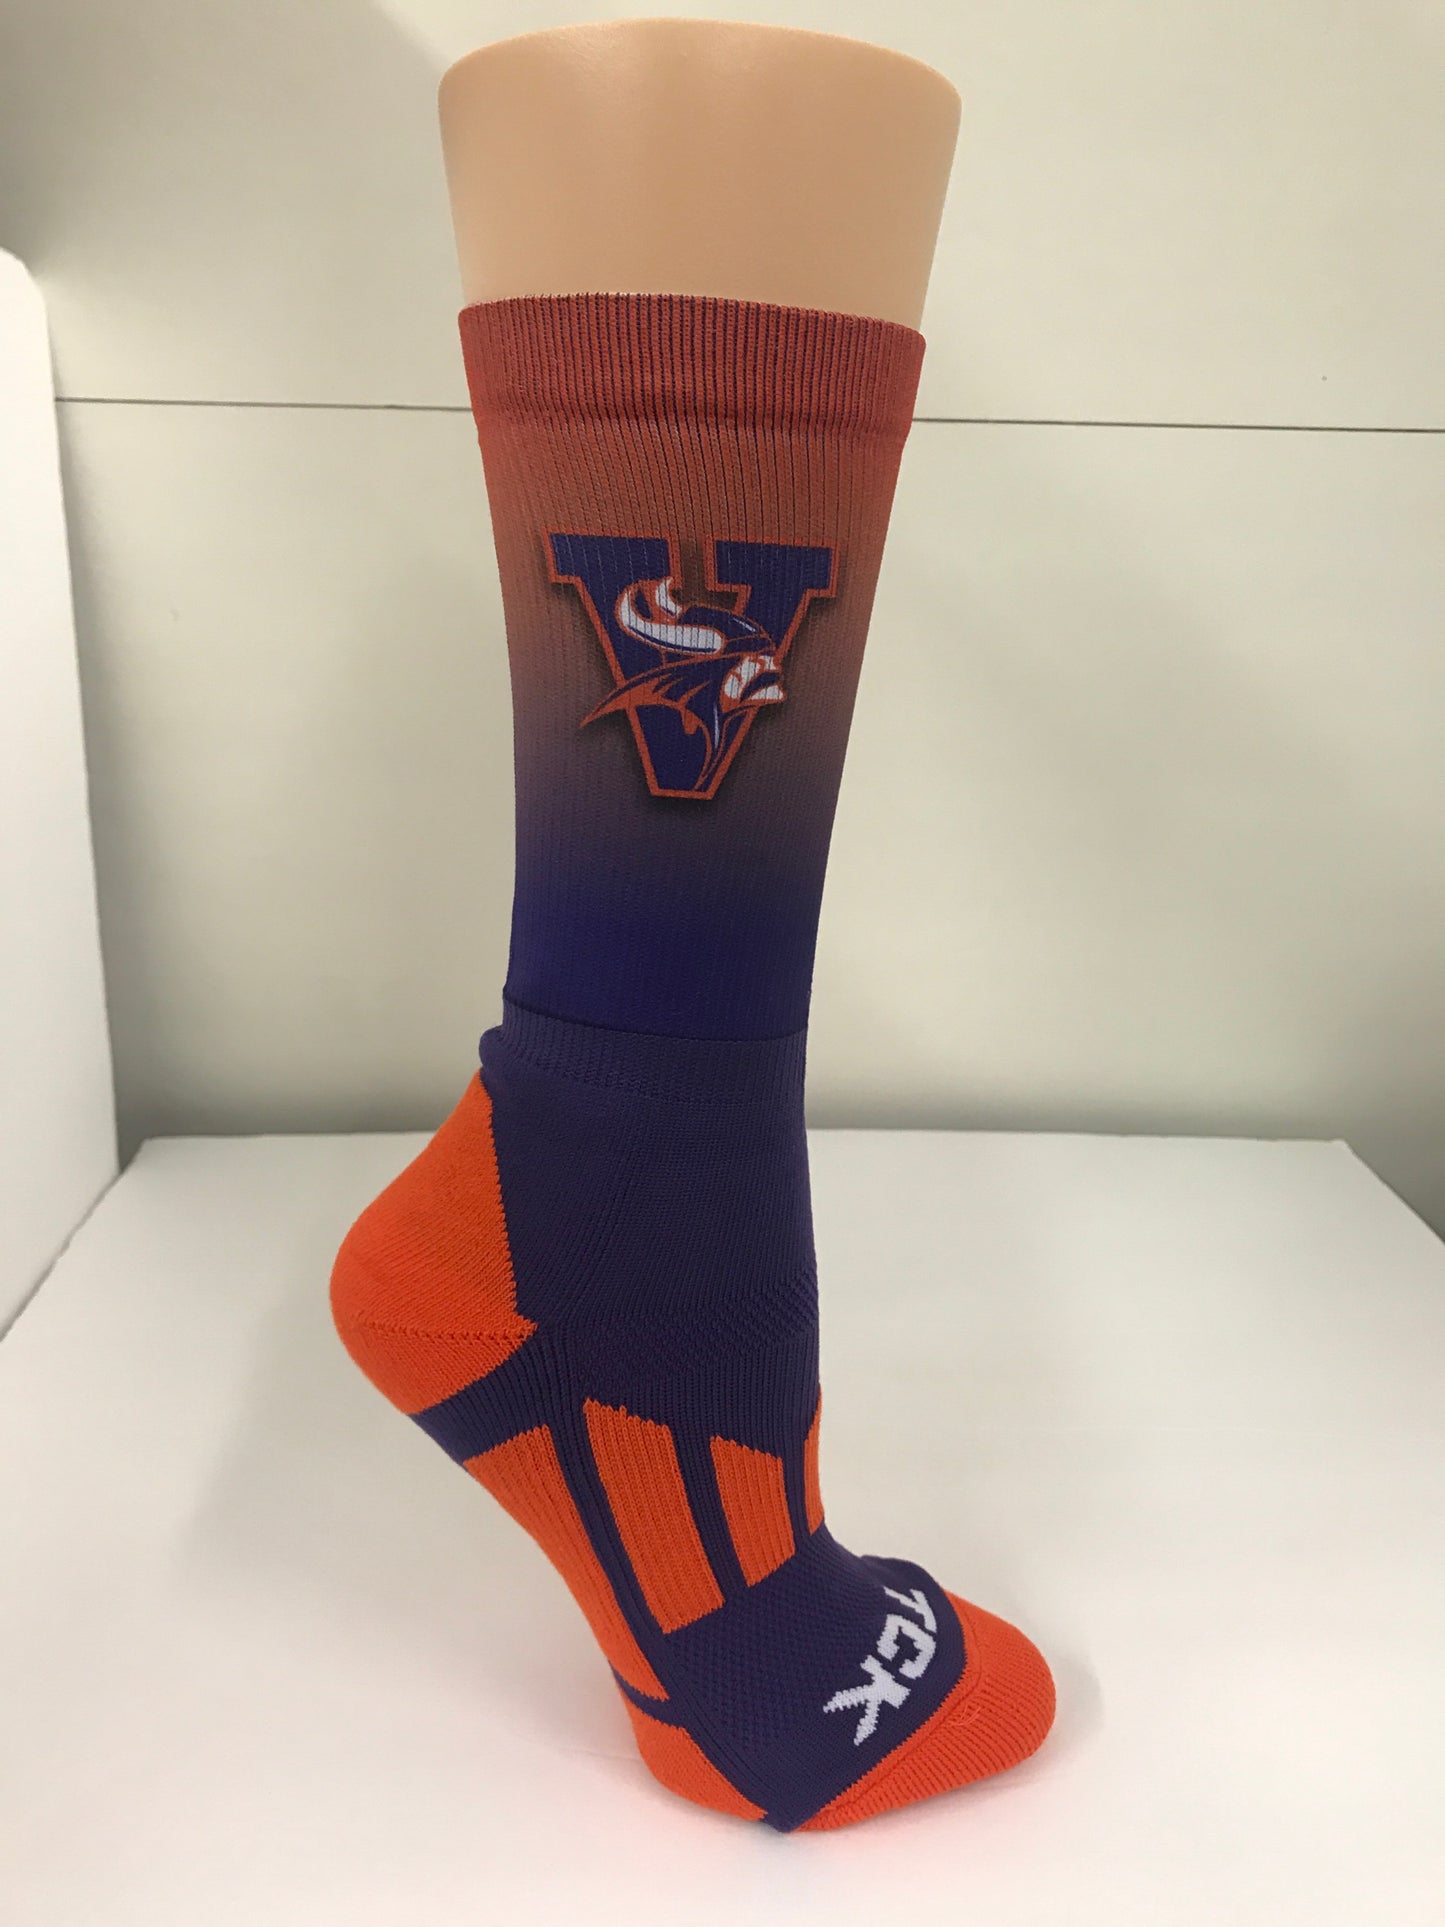 TCK Missouri Valley Sock With V